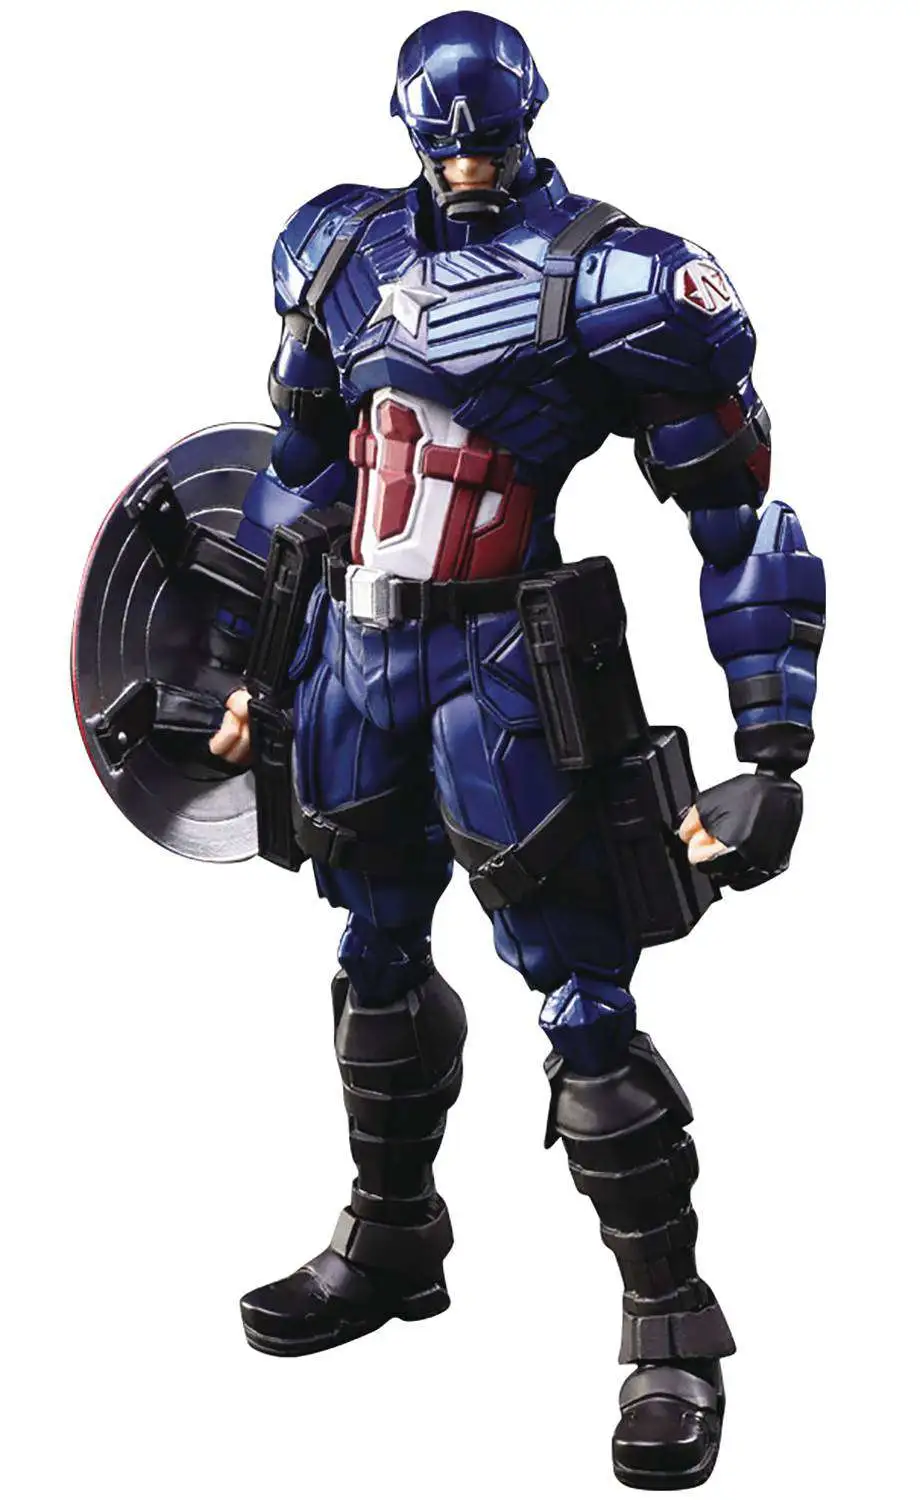 Play Arts Kai Variant Marvel Universe Avenger Captain America Action Figure Toys 